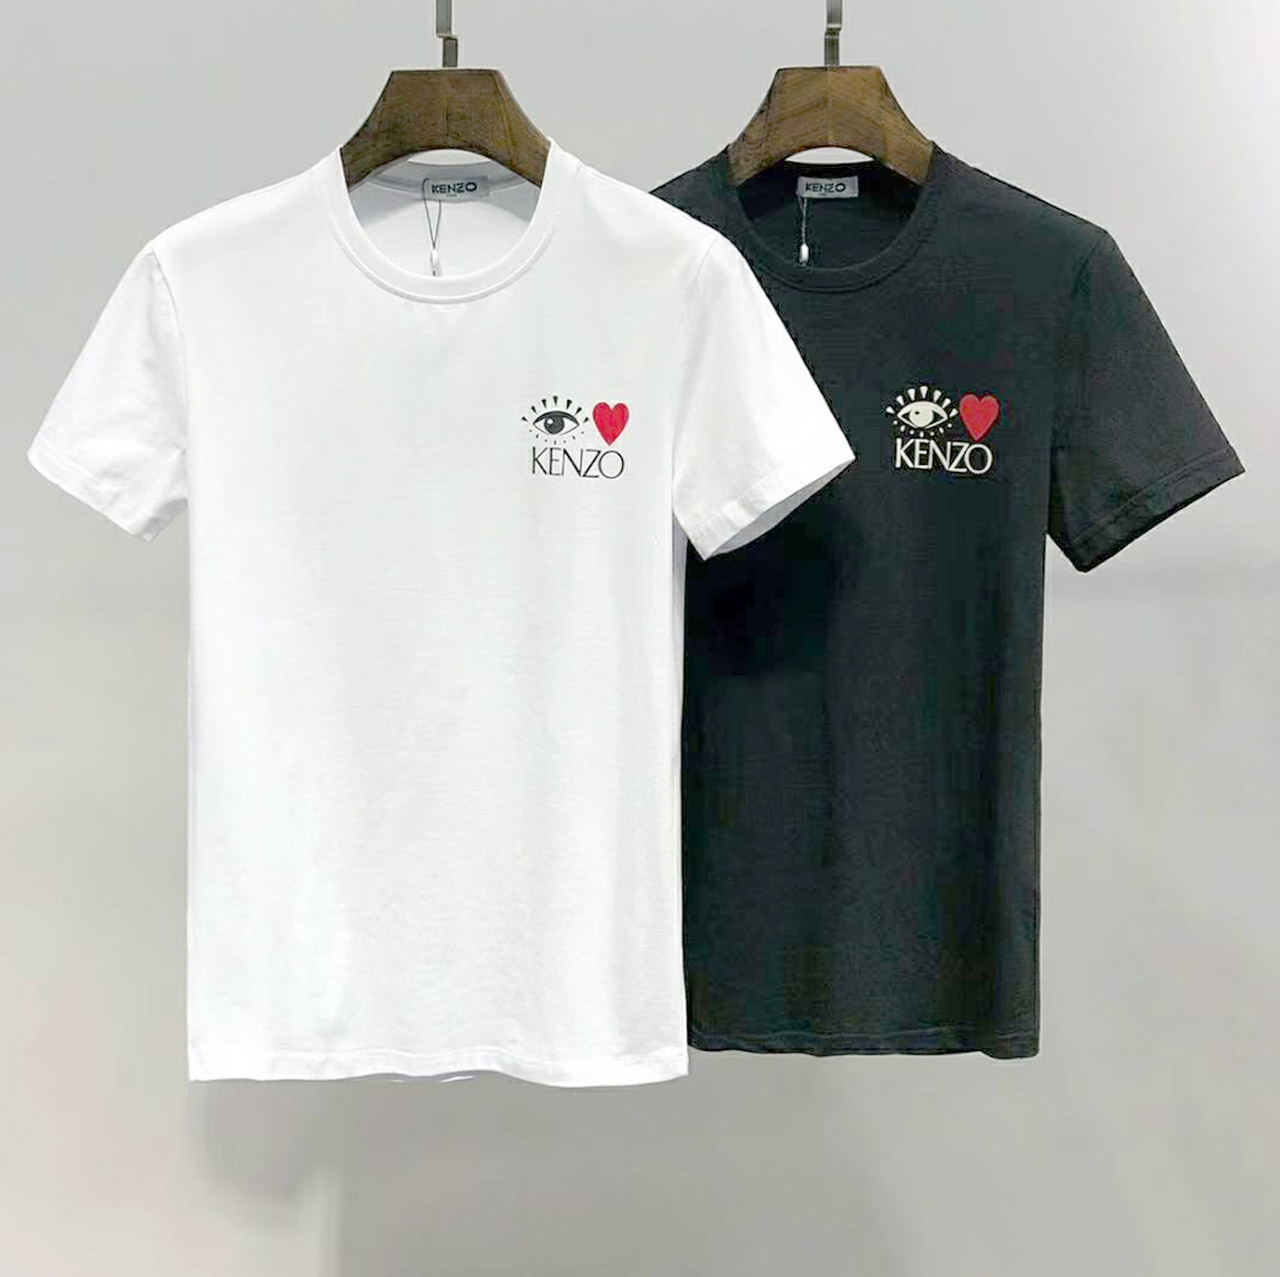 T-Shirt & Bag Design